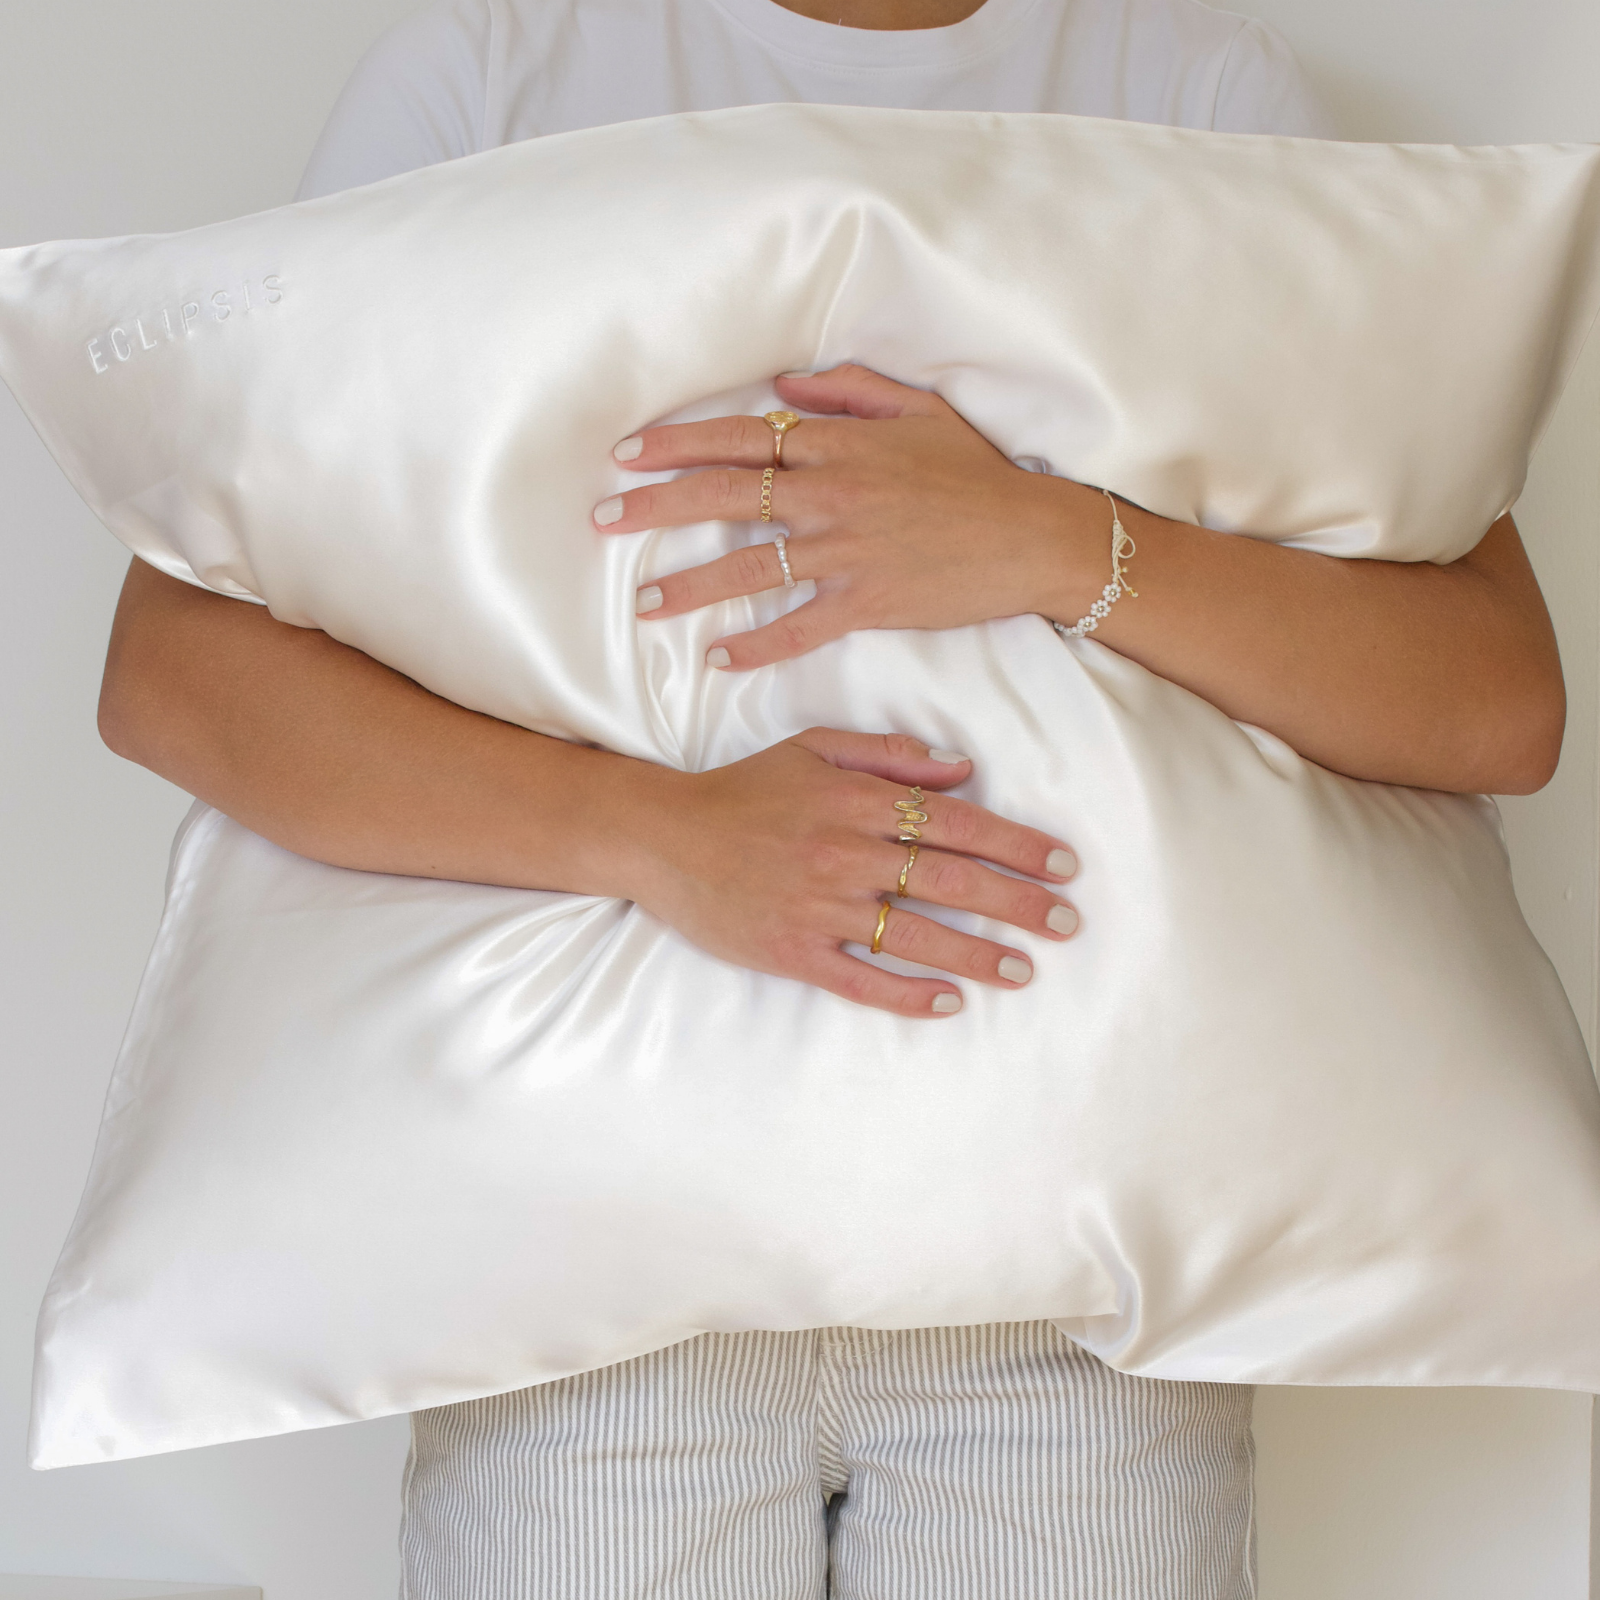 Eclipsis Silk Pillowcase - Anti-ance for all skin types